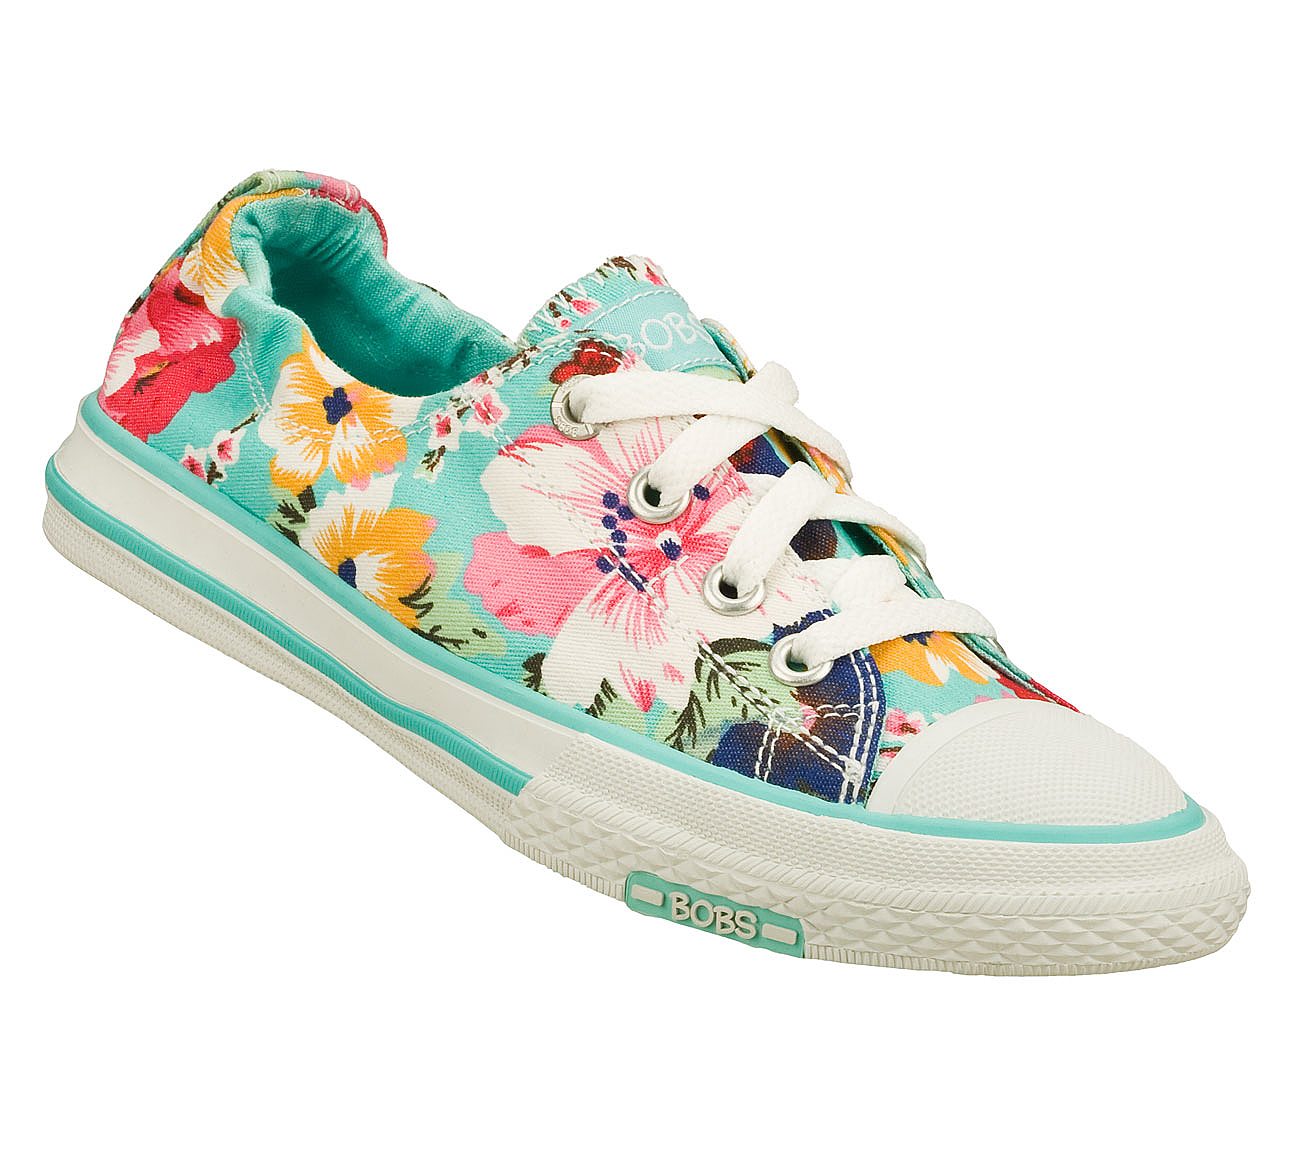 skechers floral shoes